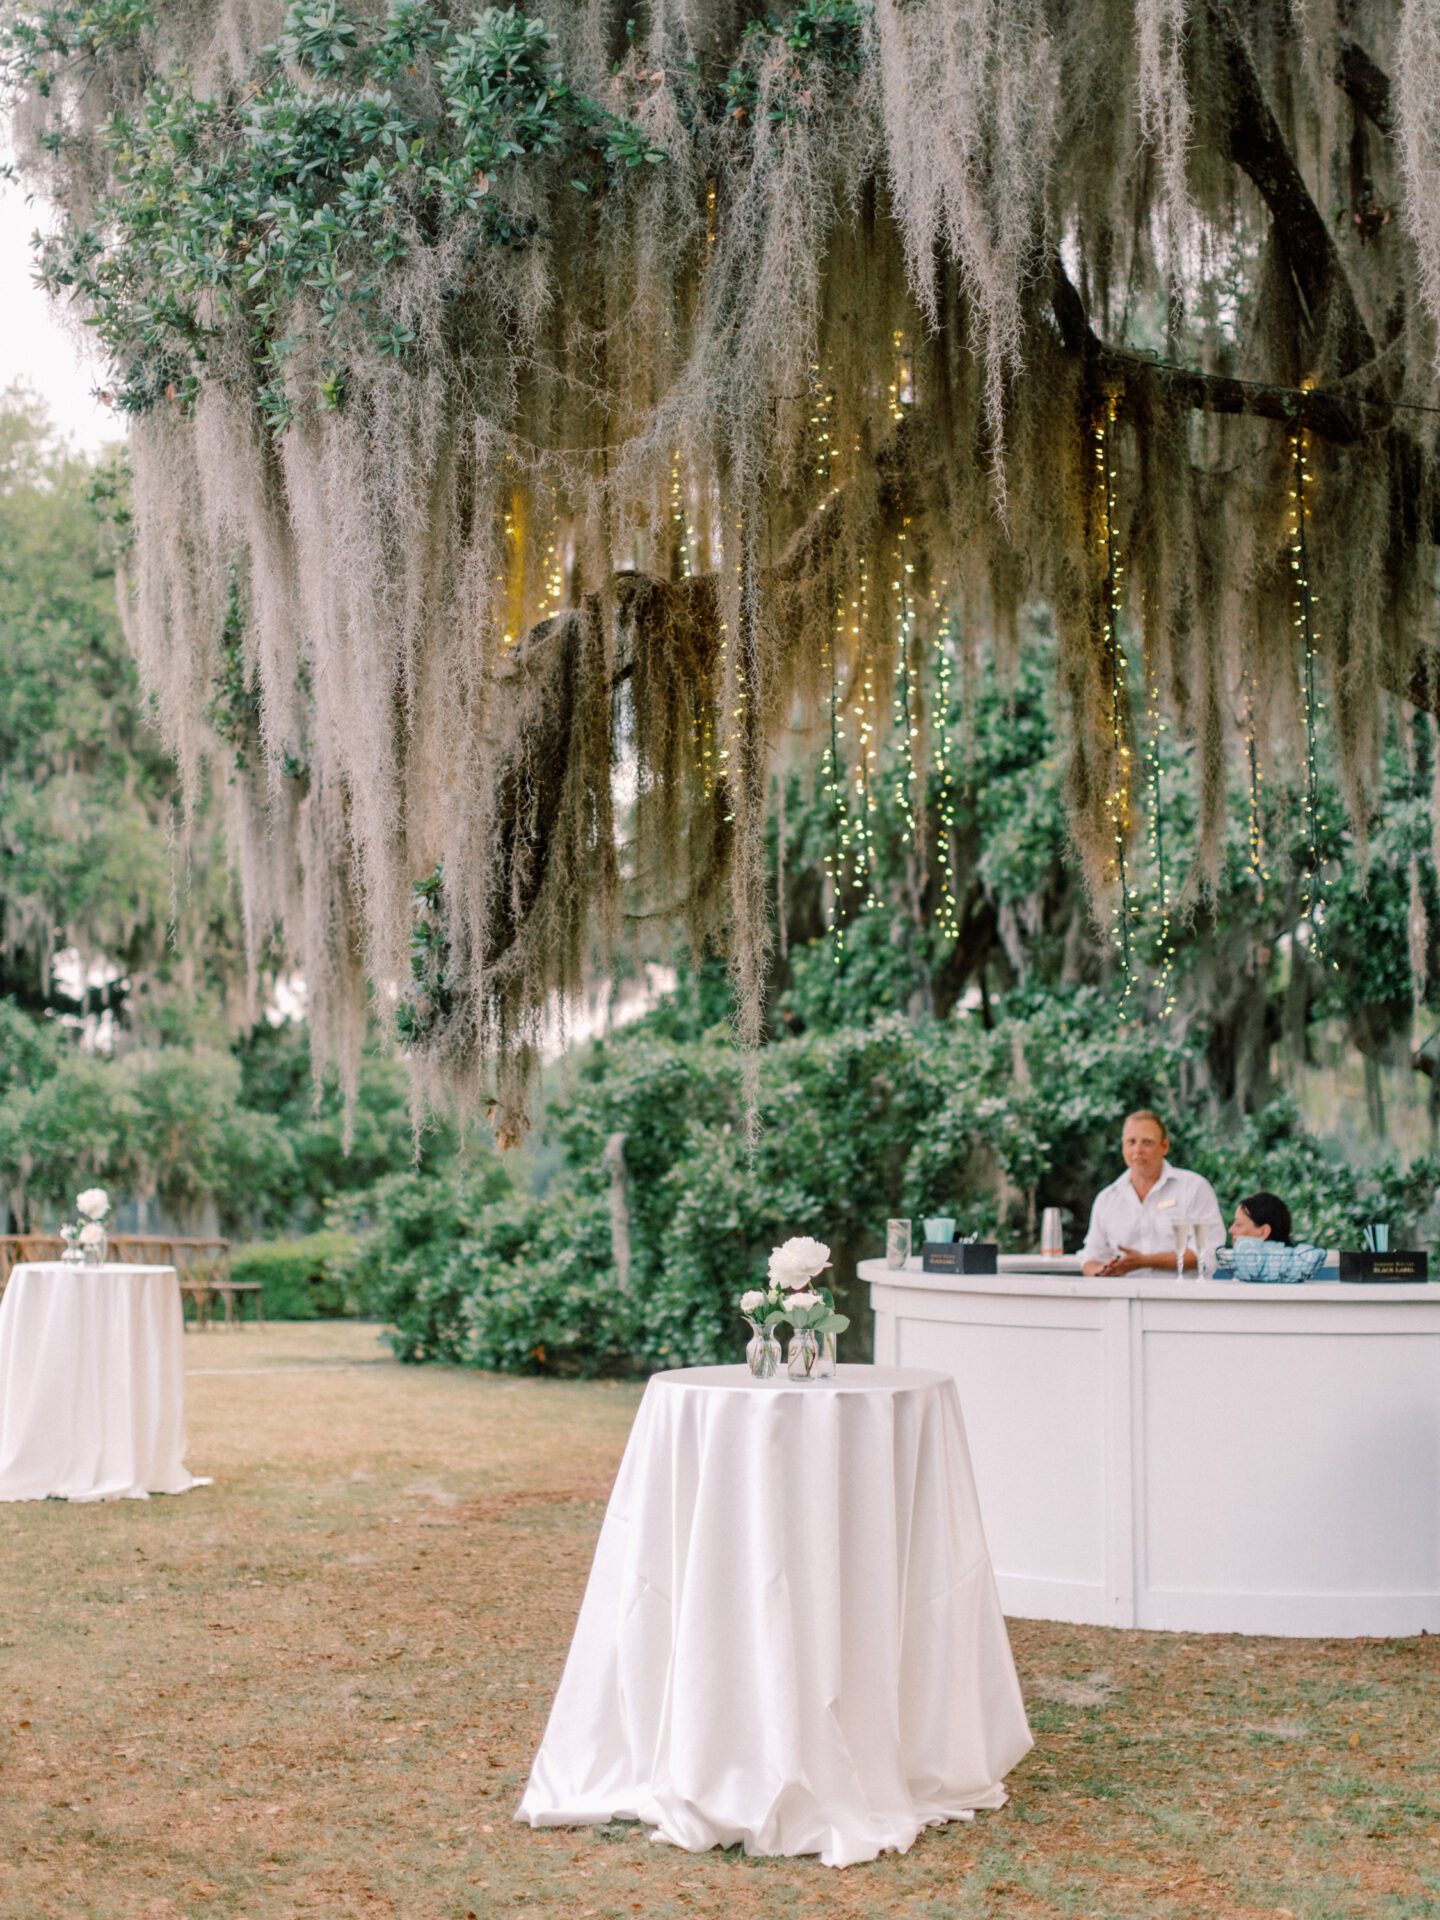 A wedding reception under a spanish moss canopy.